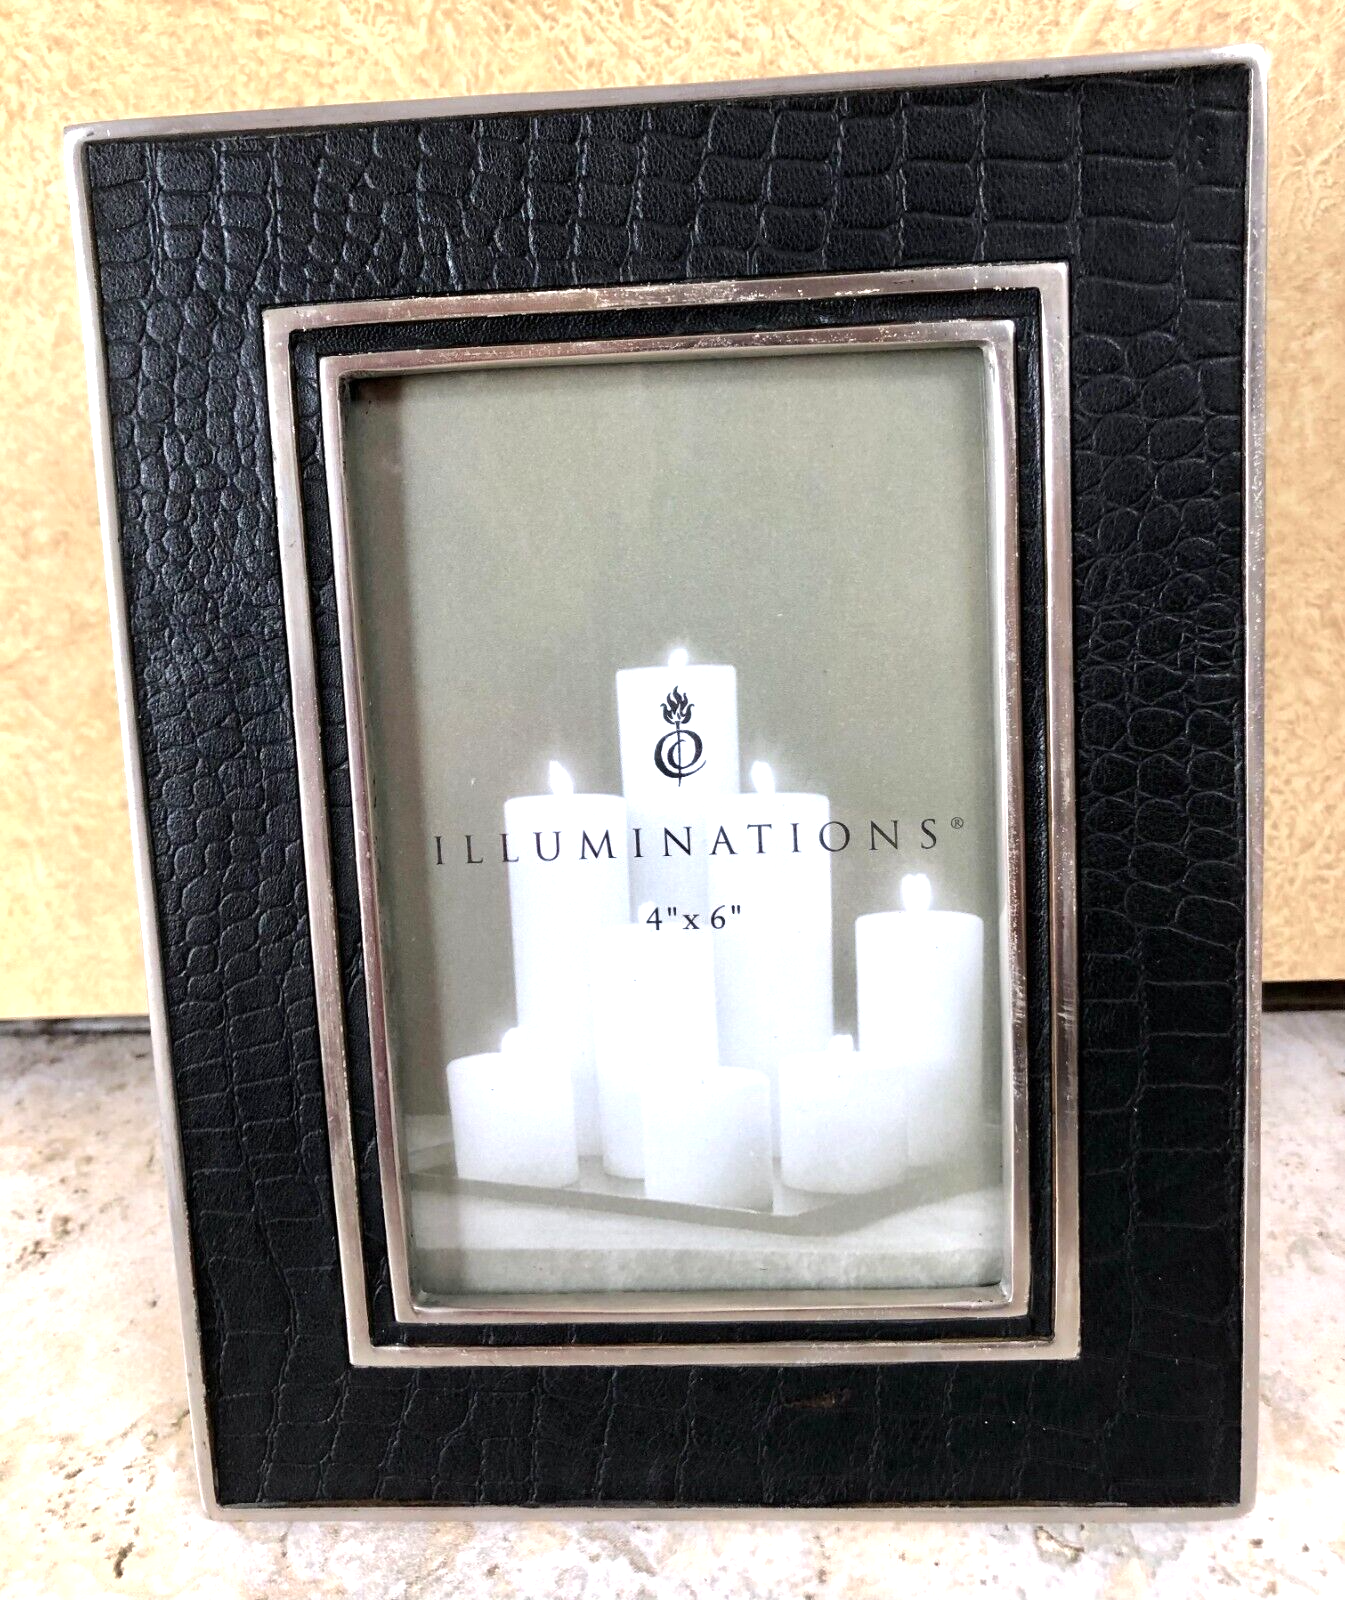 Illuminations Black Gator Leather Picture Photo Frame Glam Metal 4x6" New NIB - $25.00